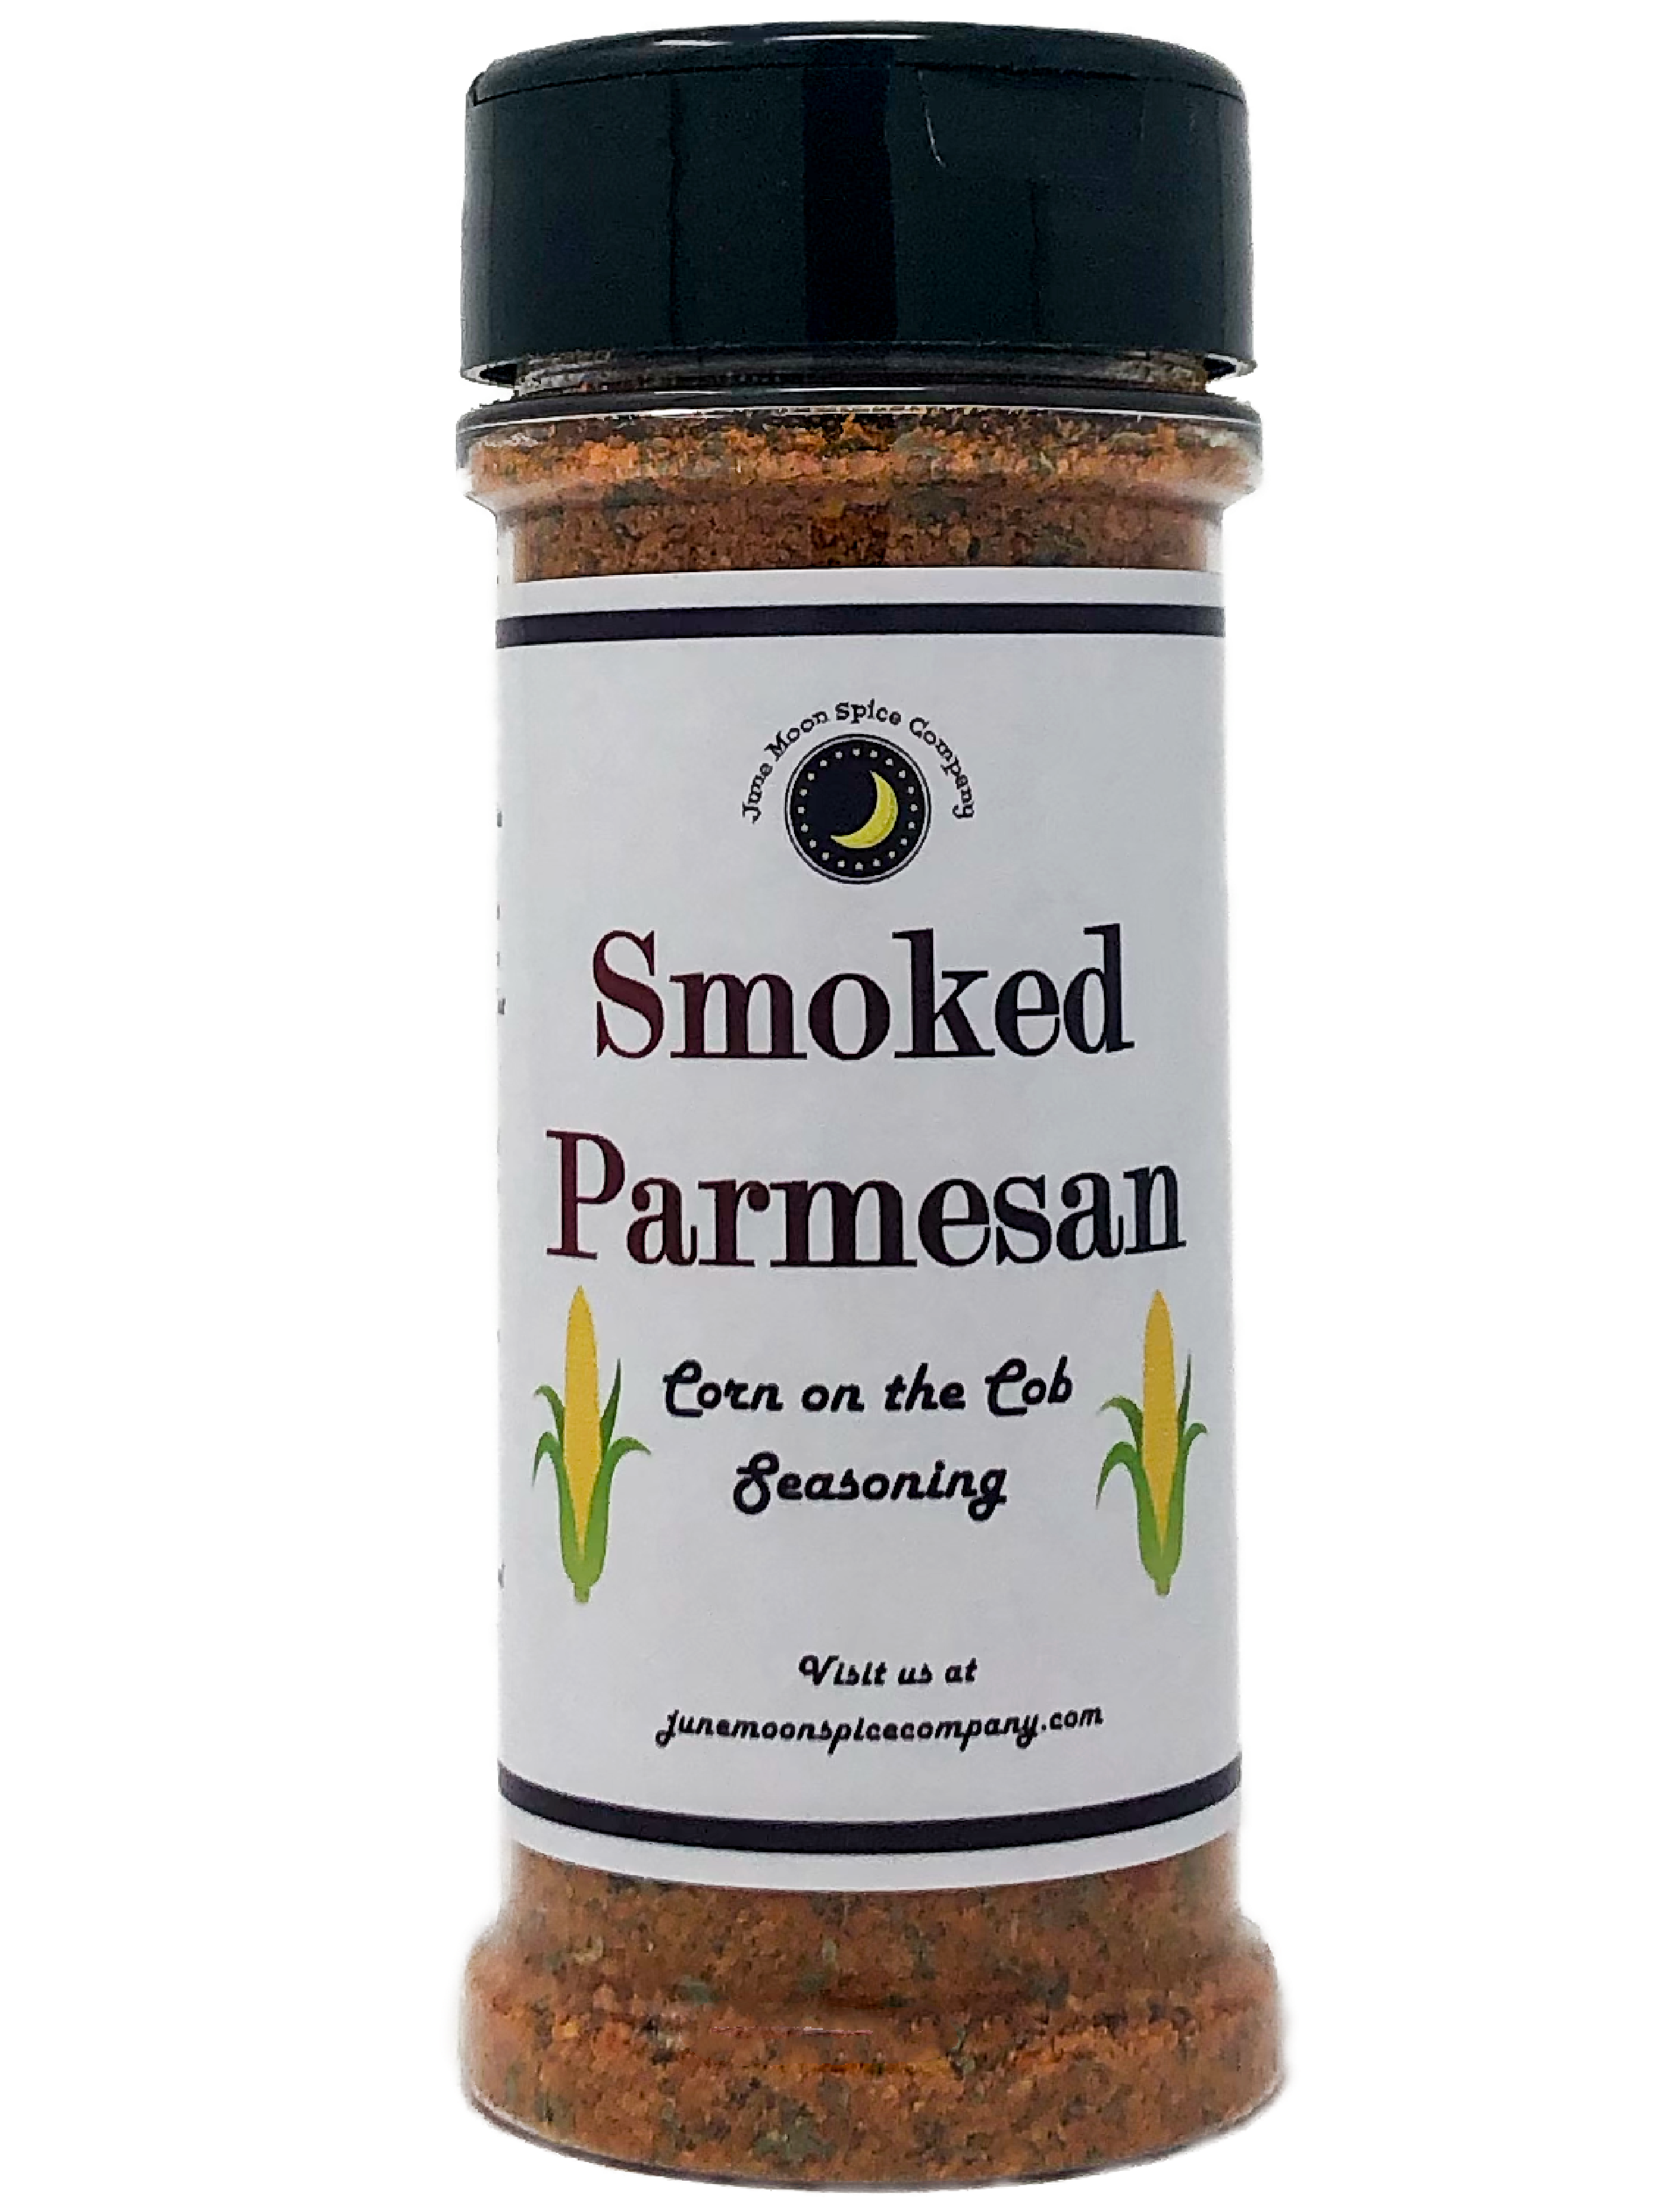 Corn on the Cob Seasonings Variety 2 Pack | Smoked Parmesan | BBQ